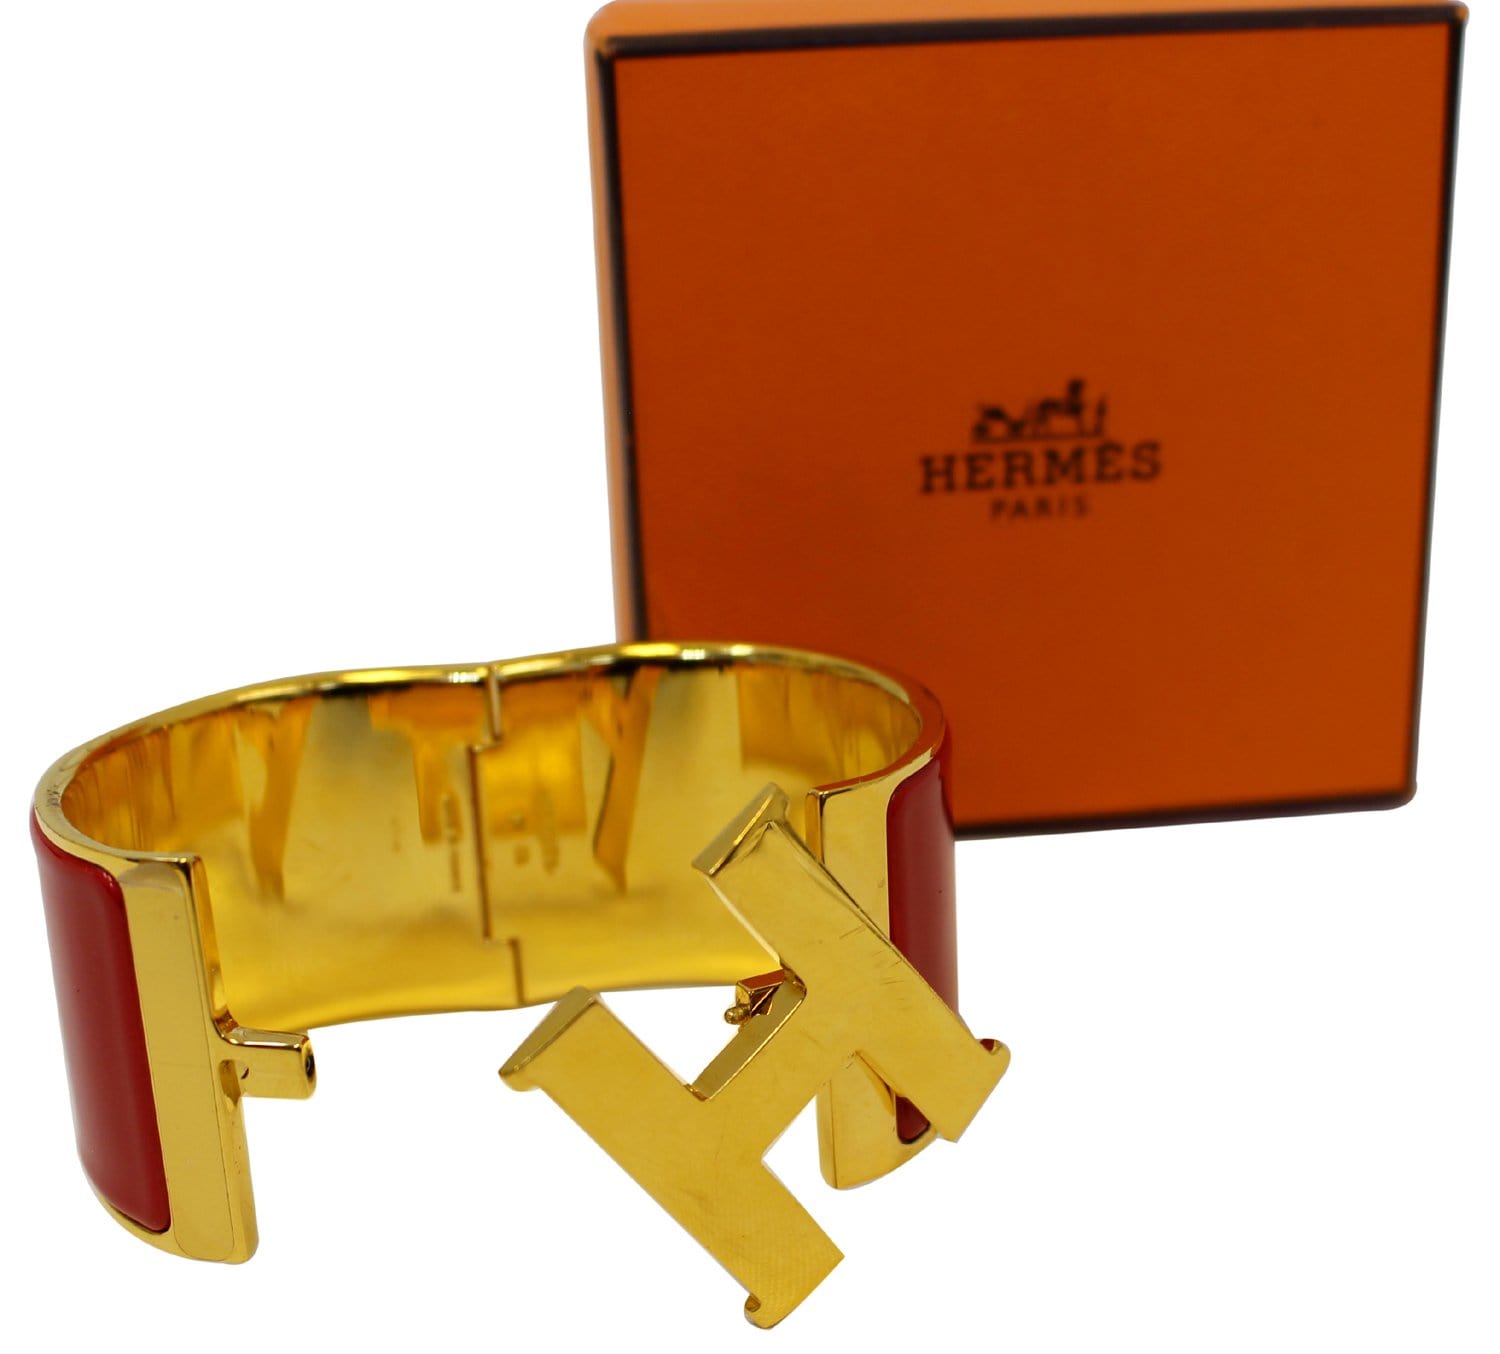 Hermès Clic H Bracelet - Black & Gold, Enamel, 17.7 cm/12 mm